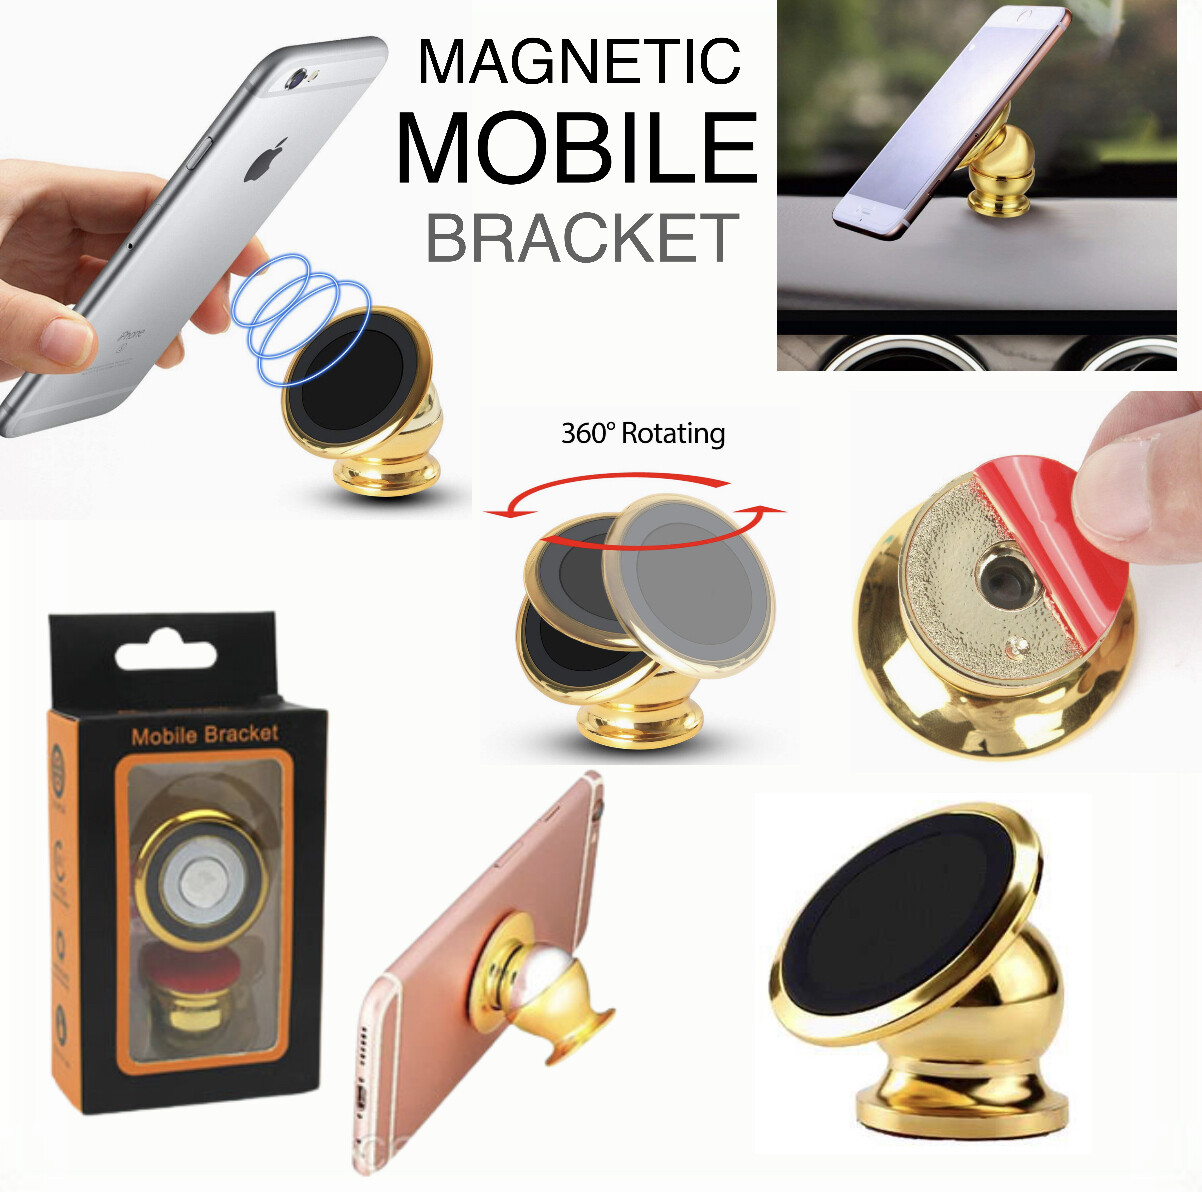 Magnetic Mobile Bracket